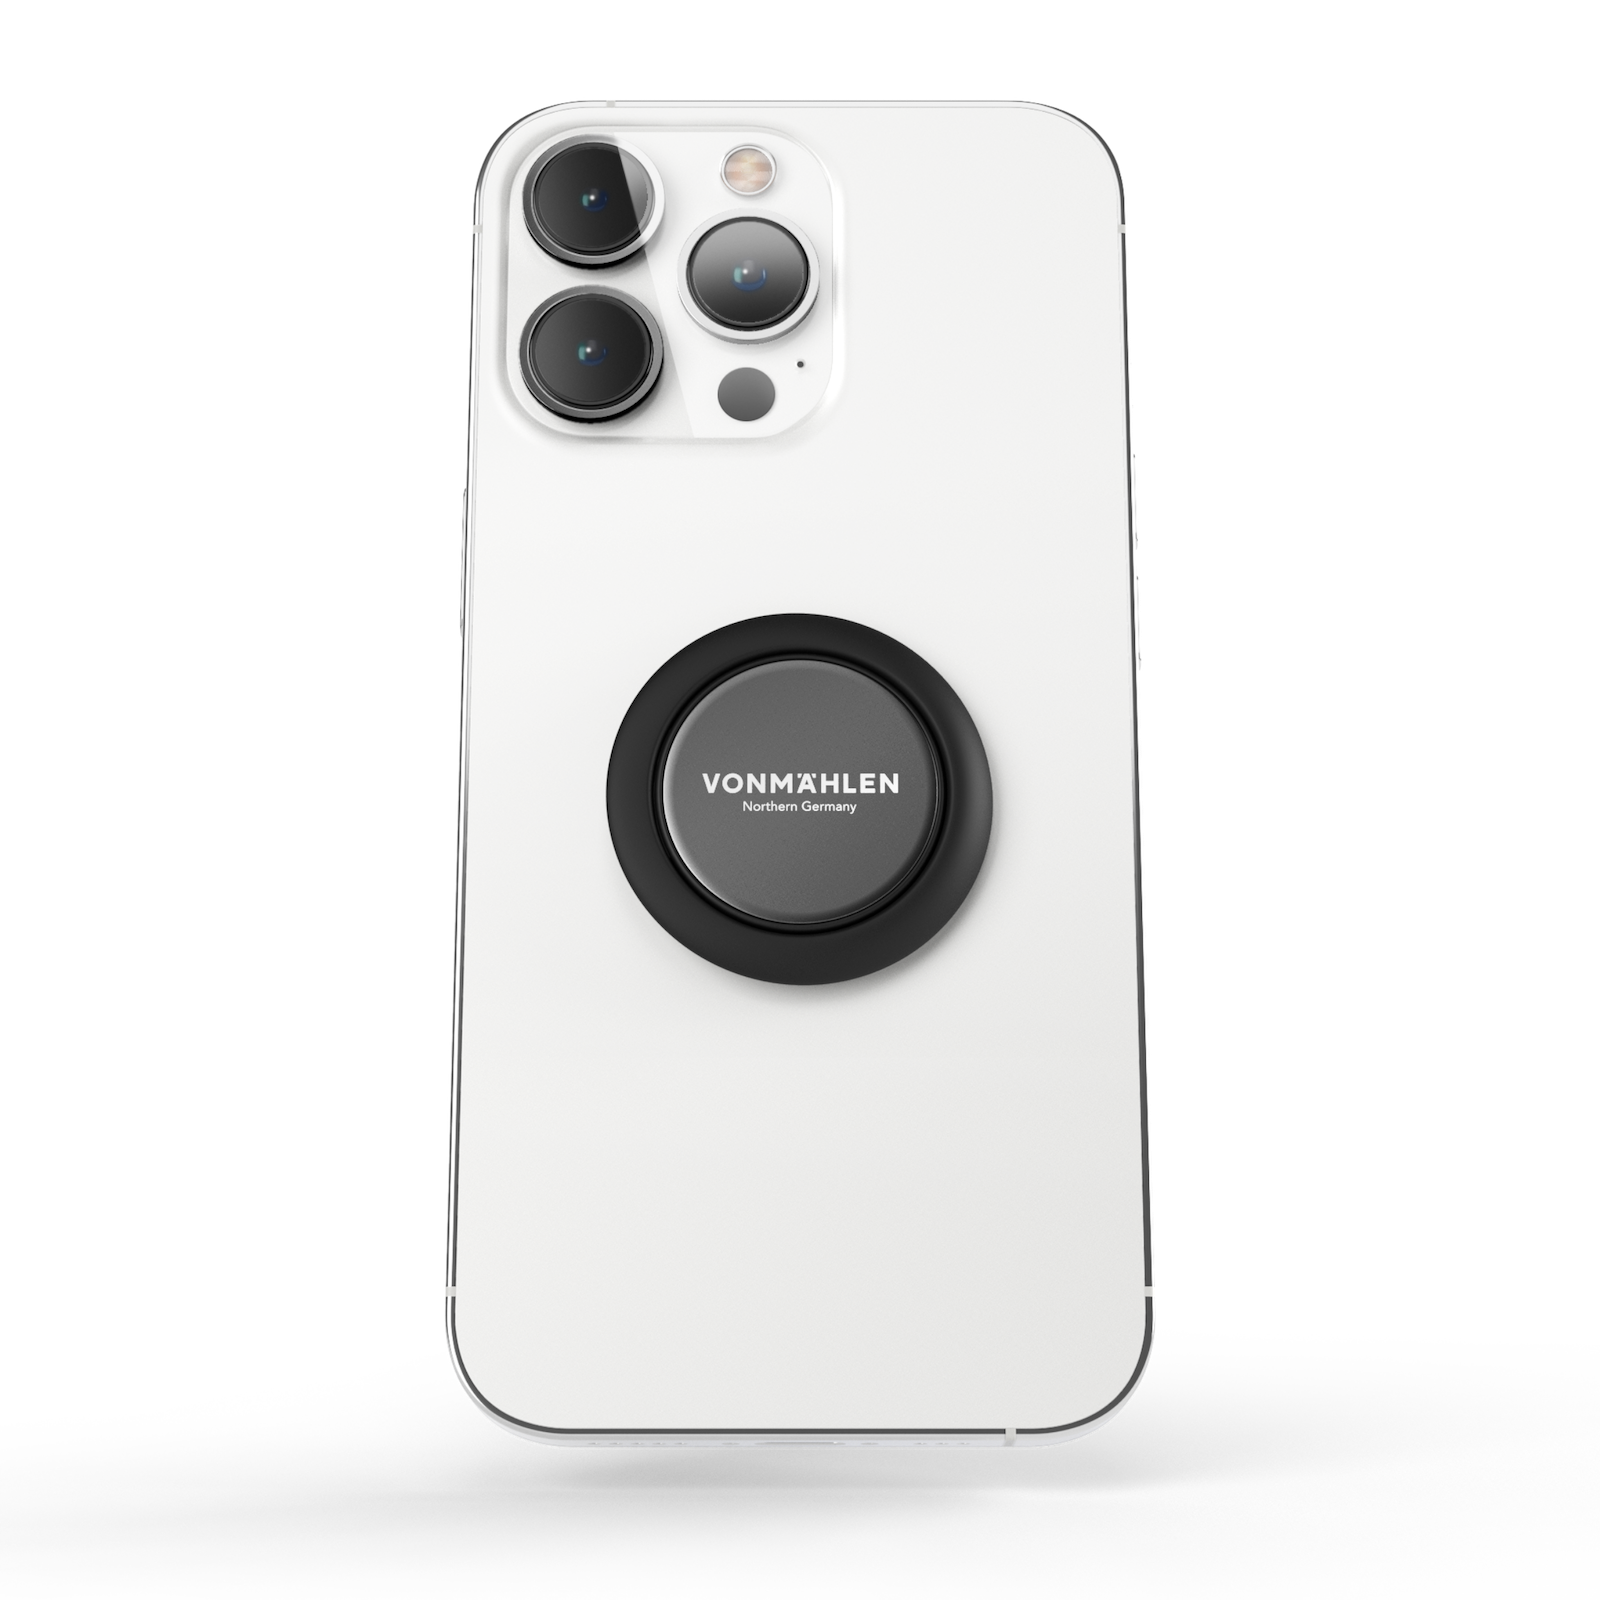 Vonmaehlen Backflip S Phone Grip/Holder + Magnetic Mount - Black